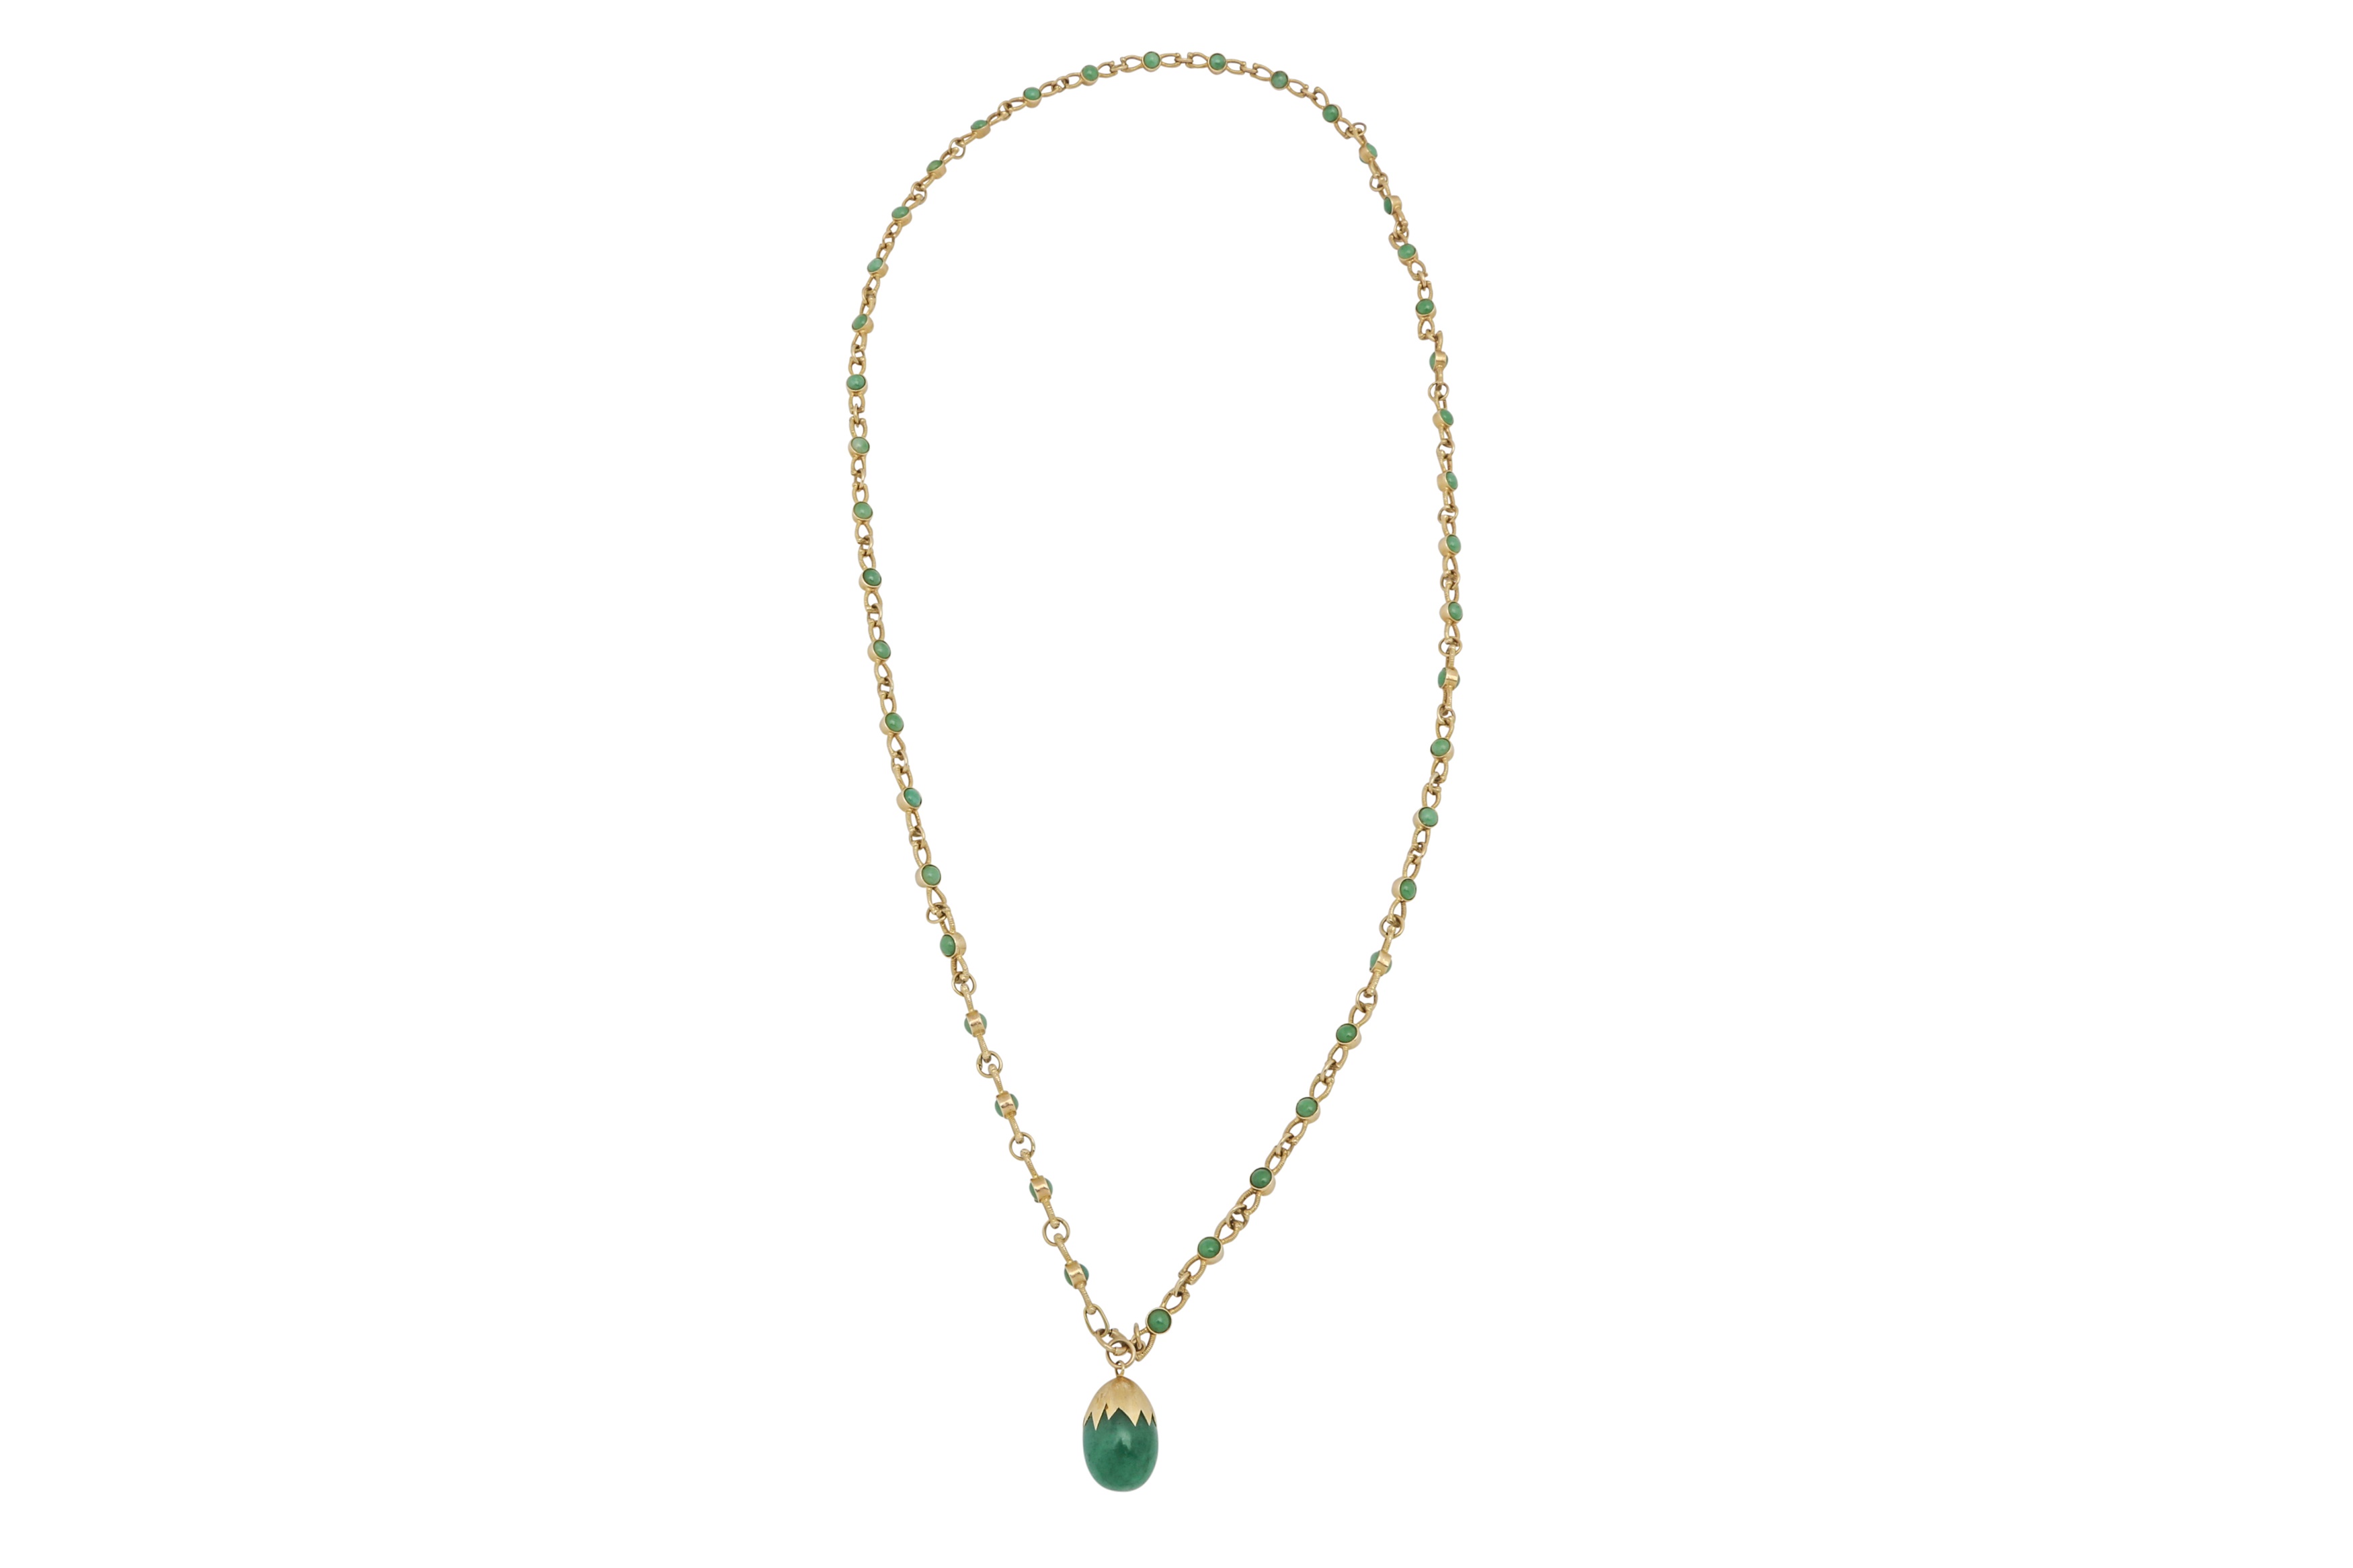 A gold and aventurine quartz pendant necklace, 1997